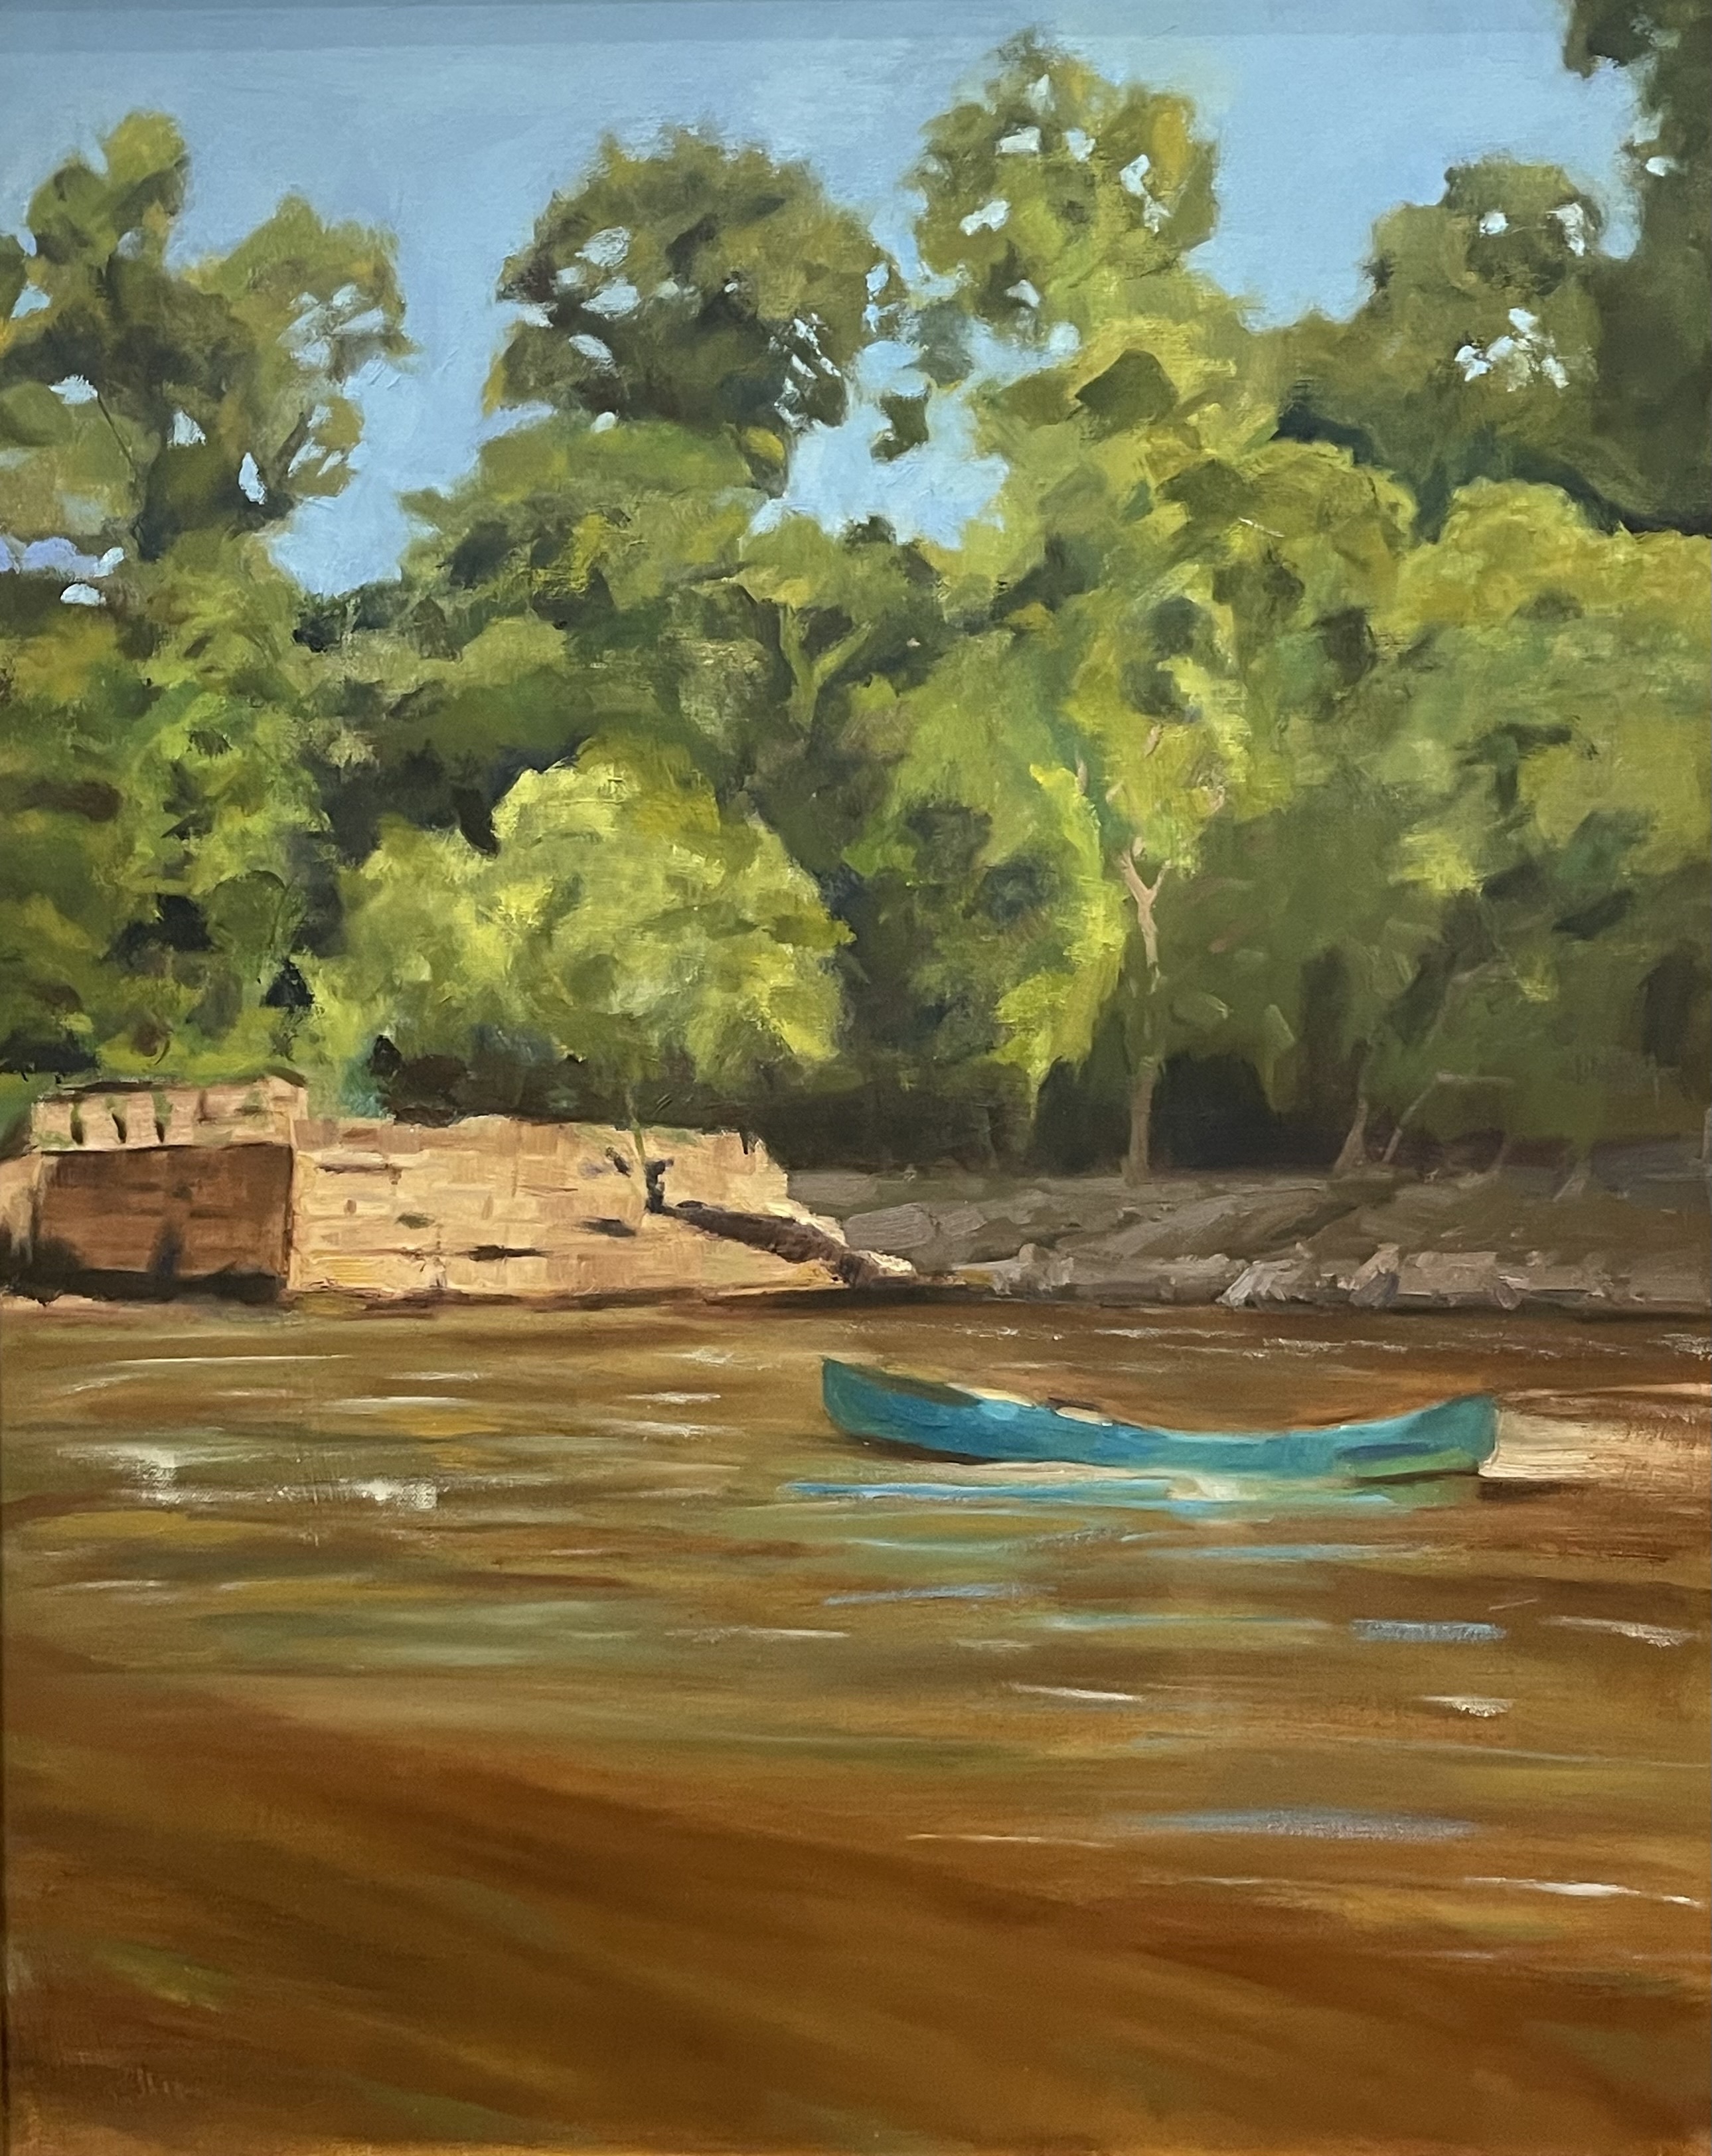 Nancy McClure - Blue Canoe - Oil on Canvas - 30x24